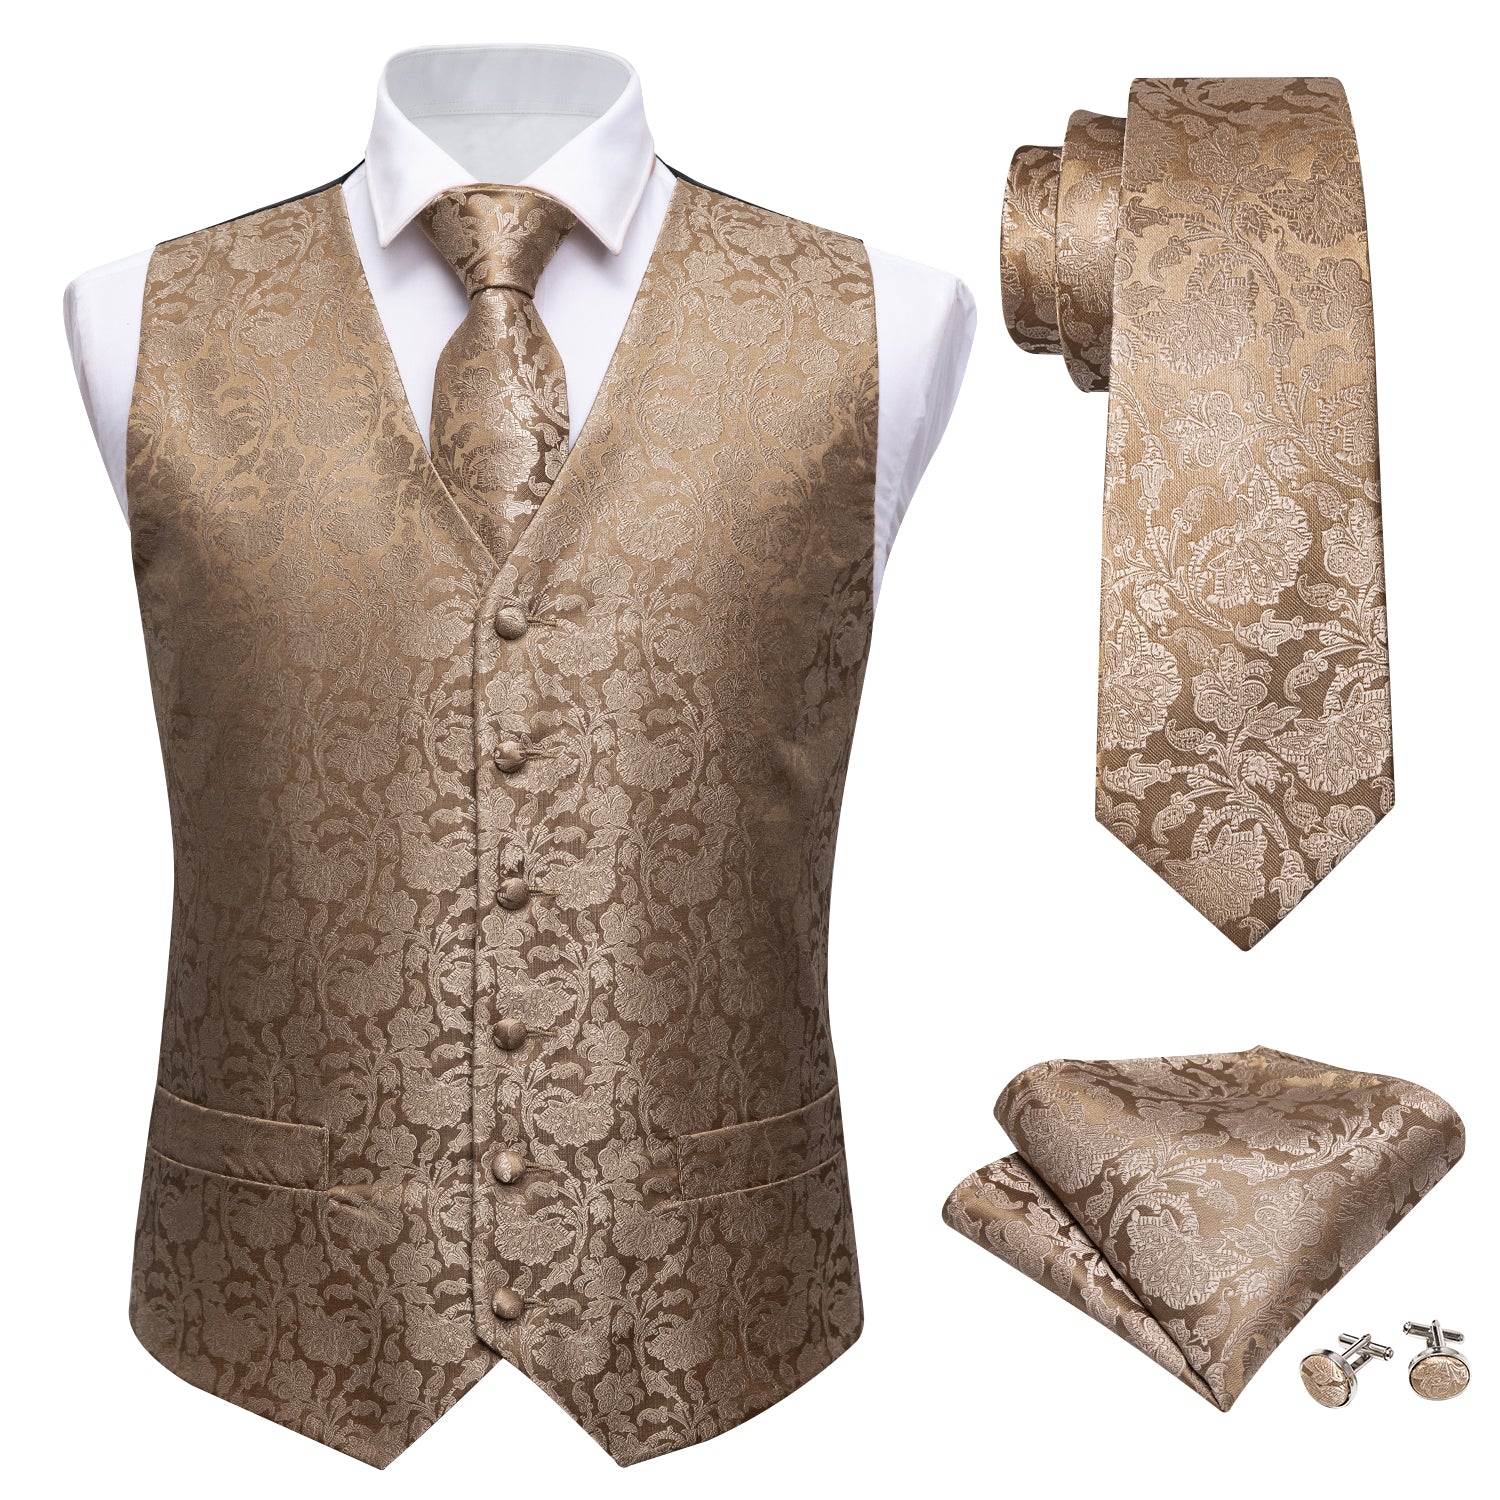 Barry.wang Men's Vest Champagne Gold Floral Silk Vest Necktie Set Wedding